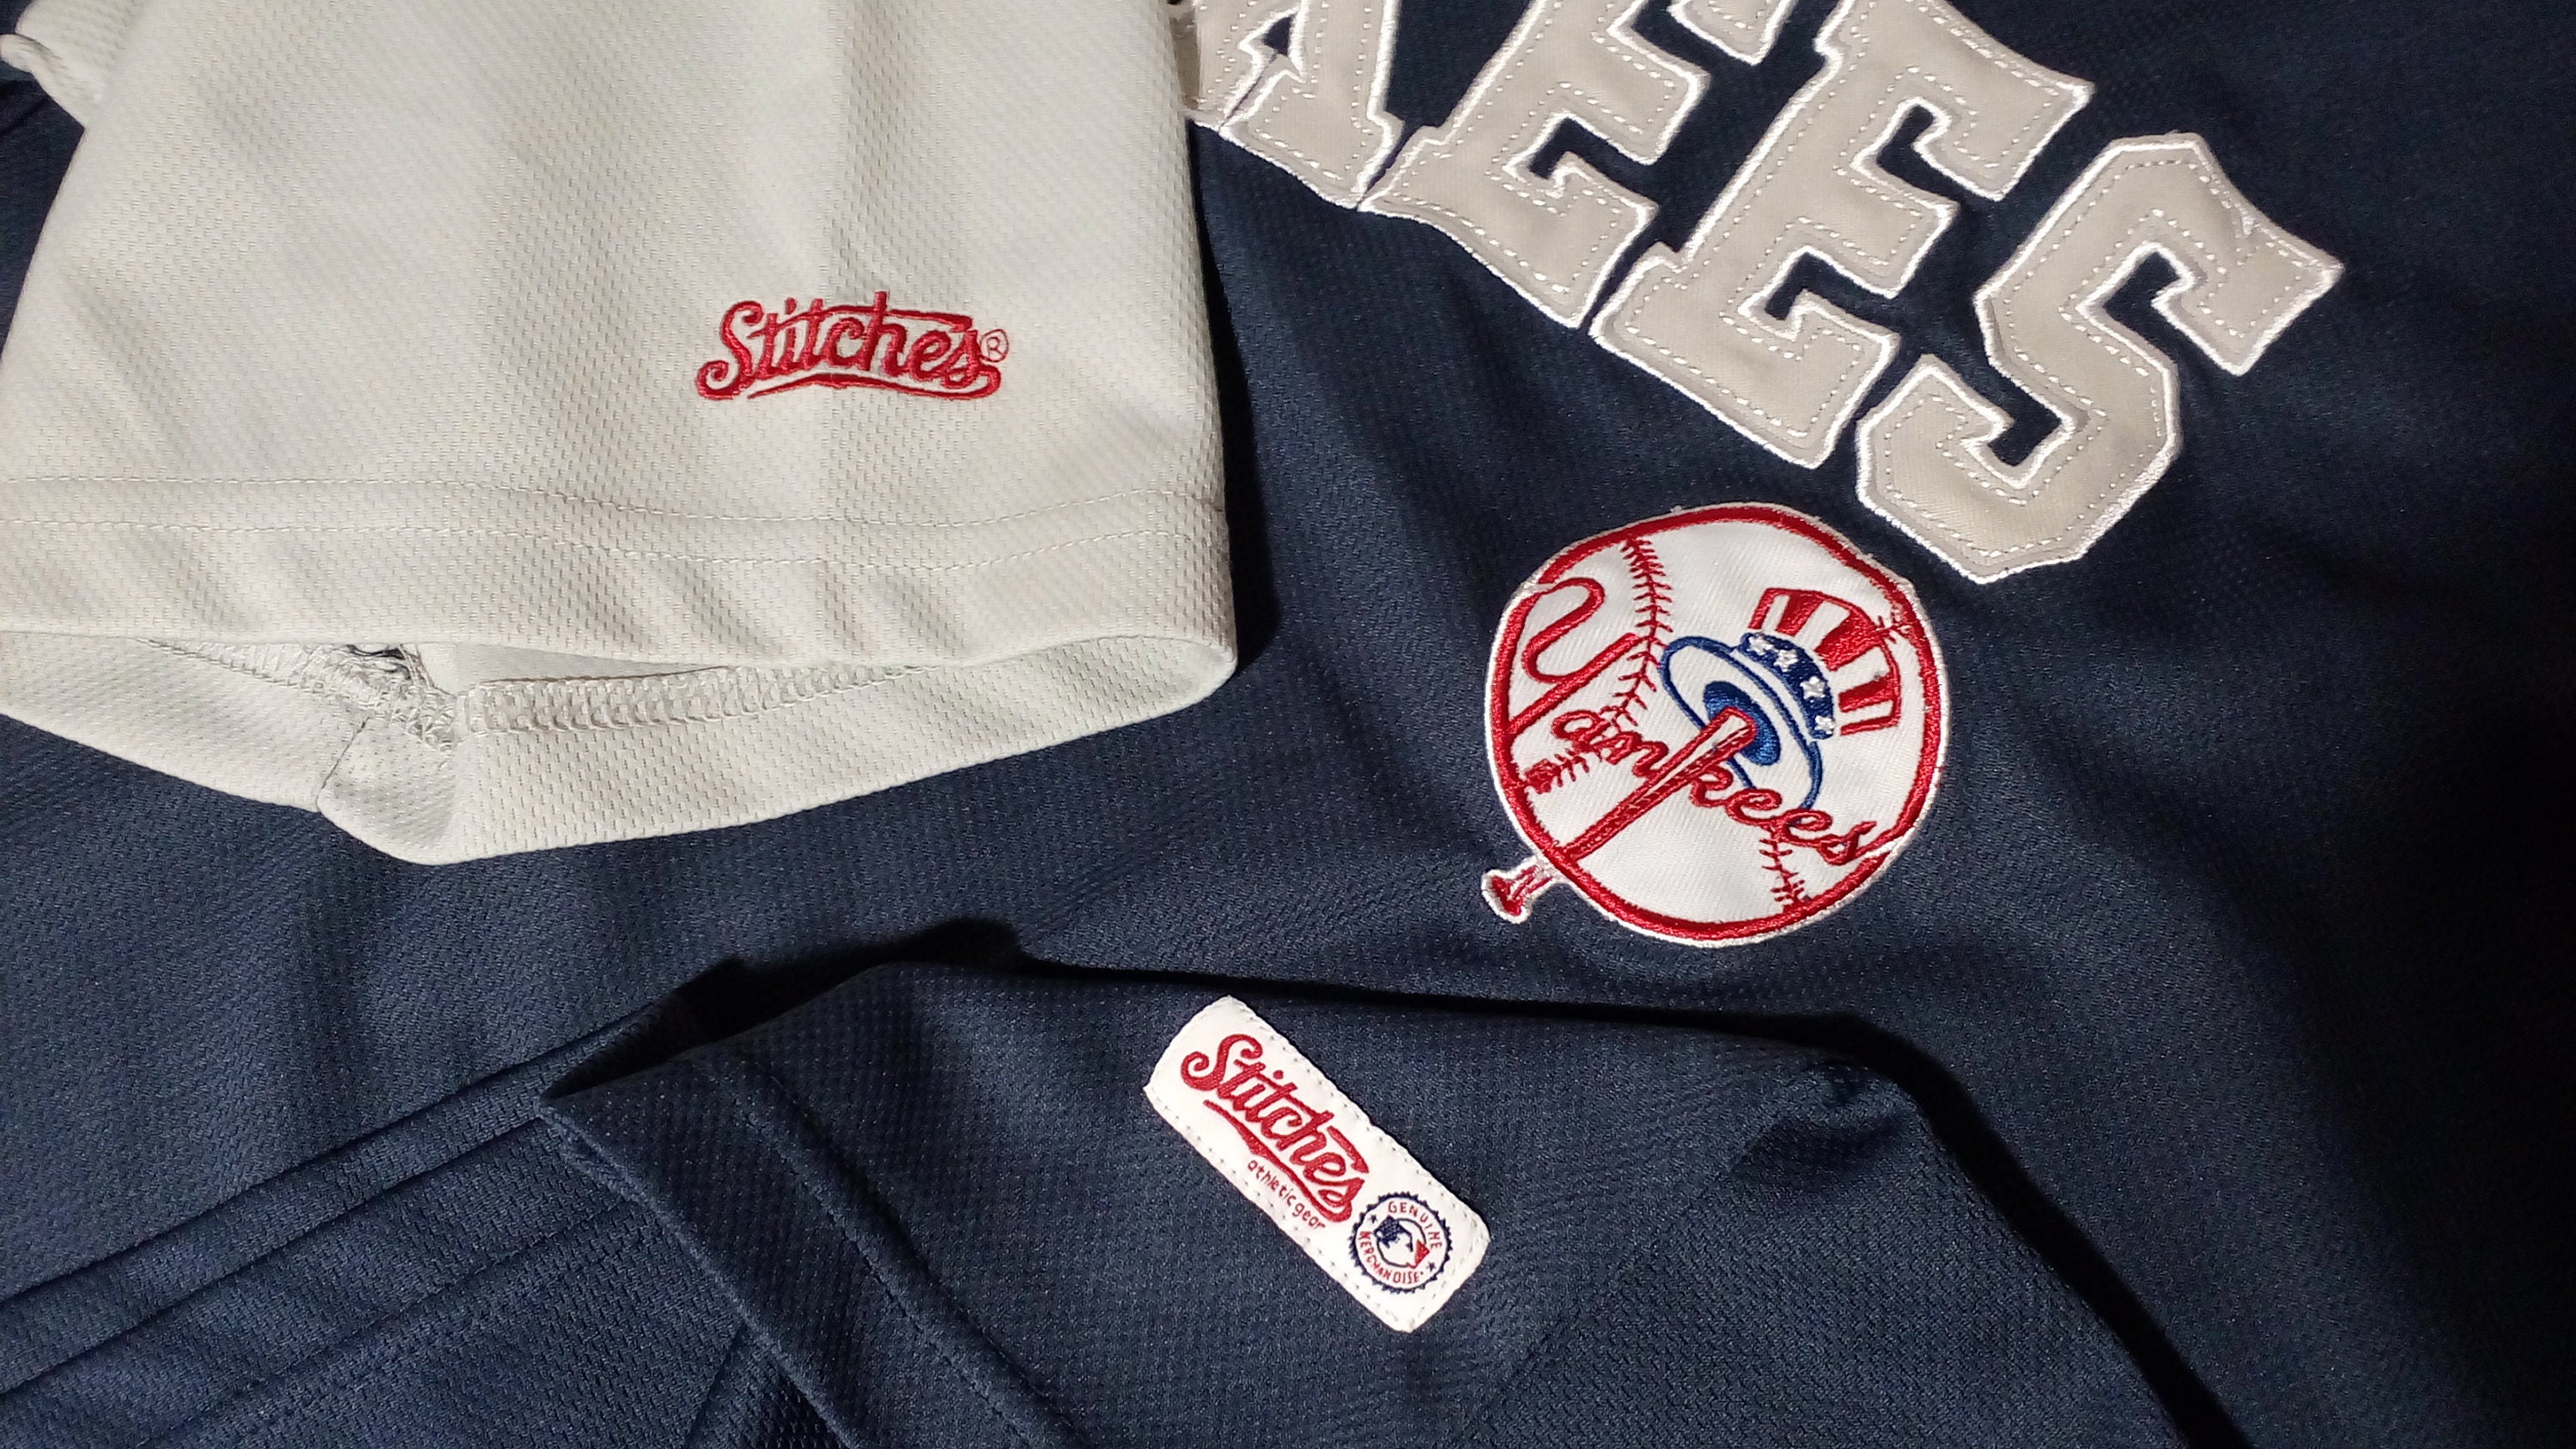 SportsVintageStuff New York Yankees USA American Baseball Team Stitches Men's Sports Uniform Jersey Shirt Knitwear Wear Size XL/2XL